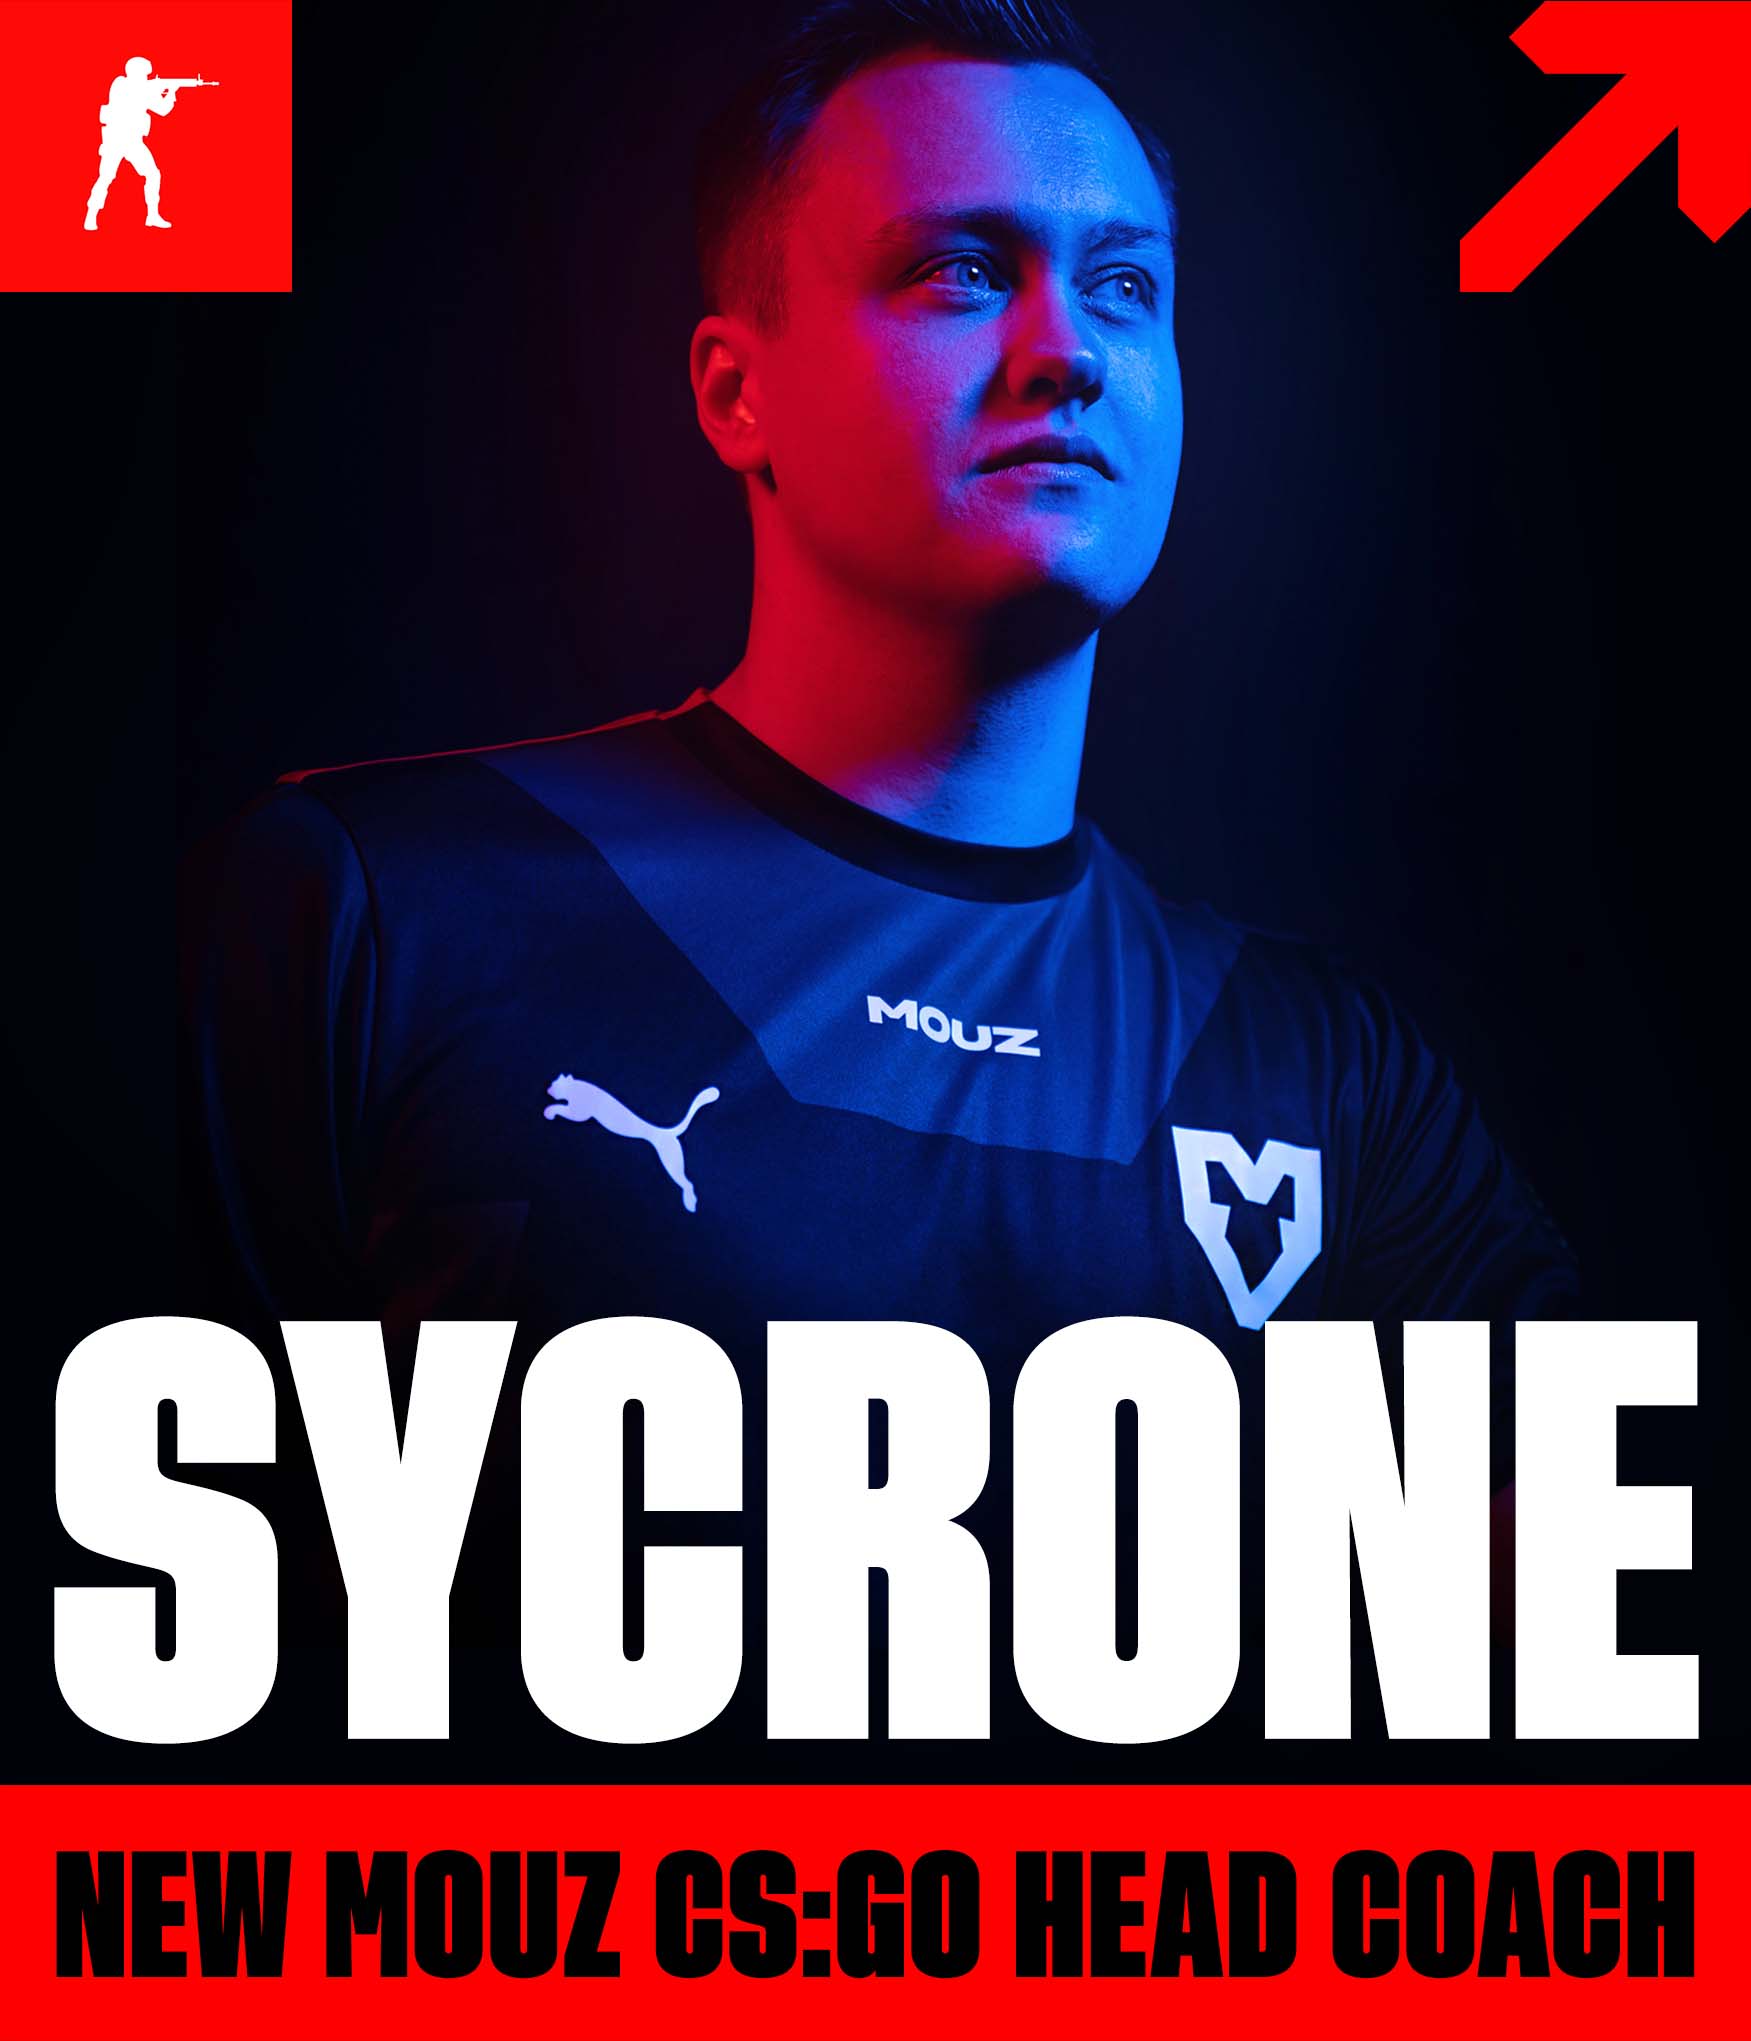 sycrone got a deserved promotion